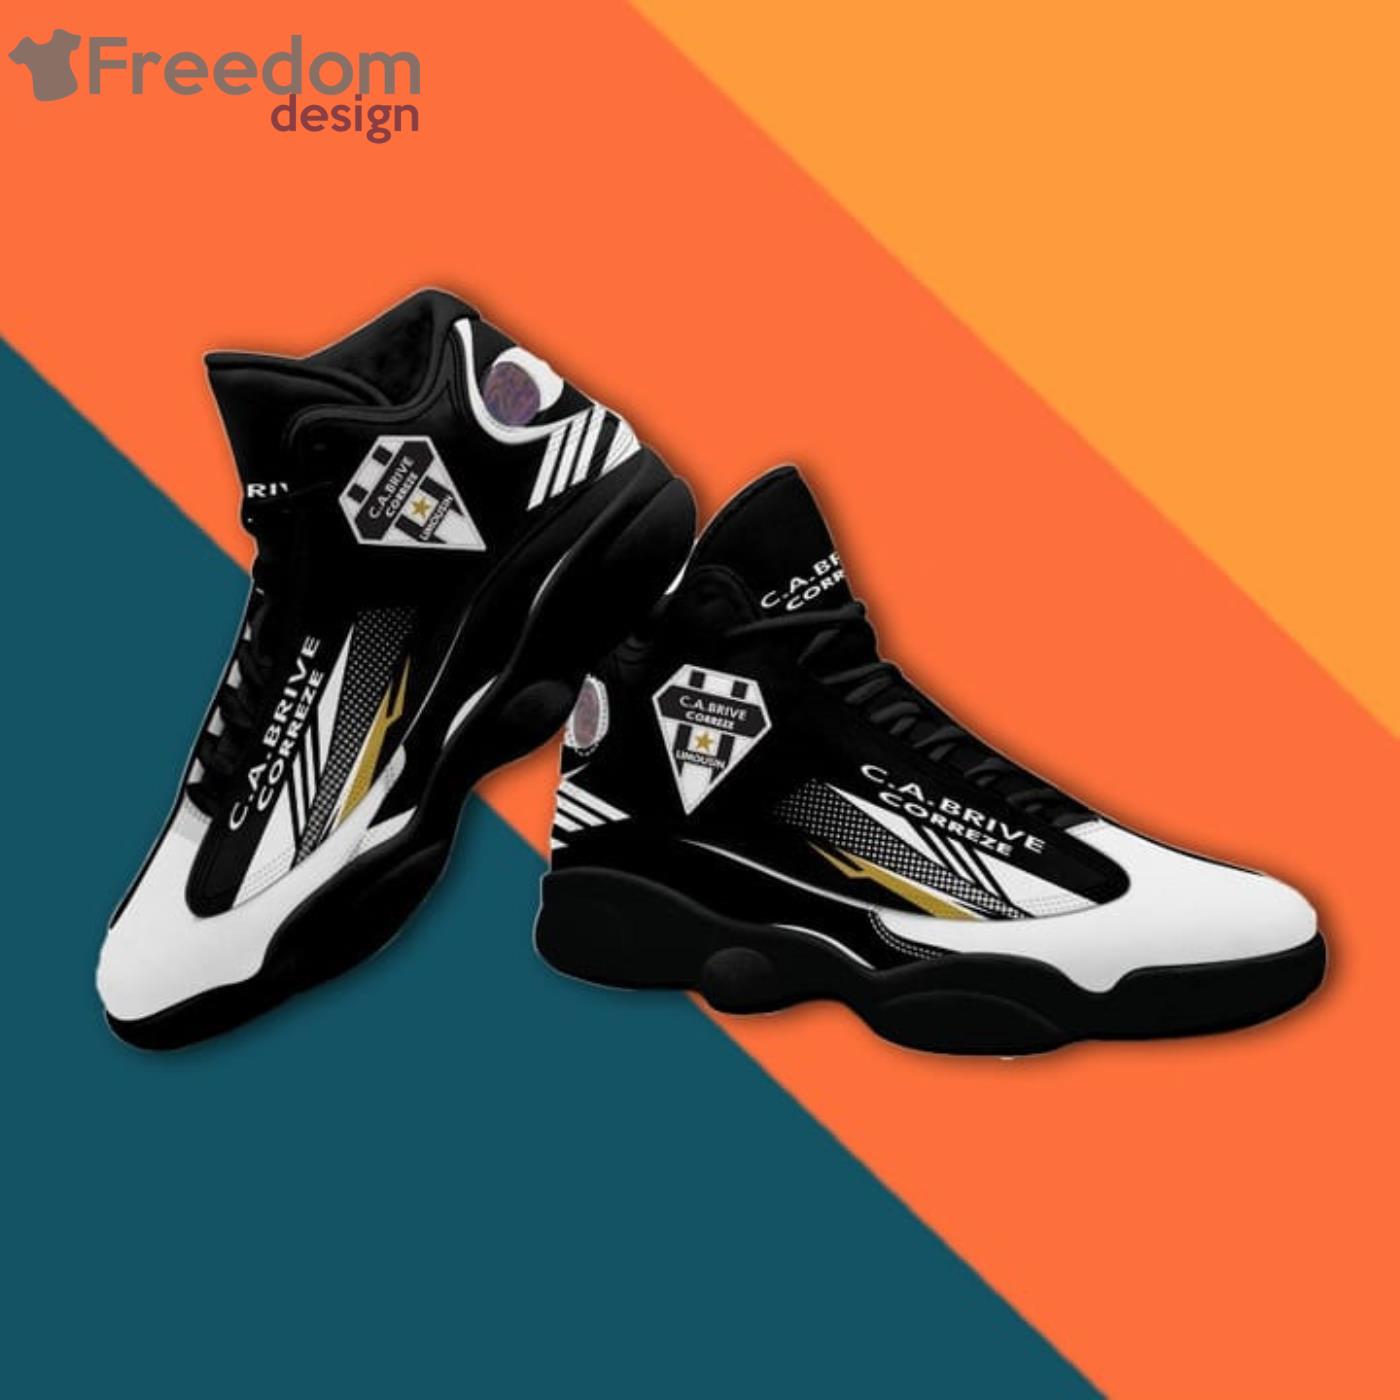 Burberry Air Jordan 13 Sneaker Shoes - Freedomdesign